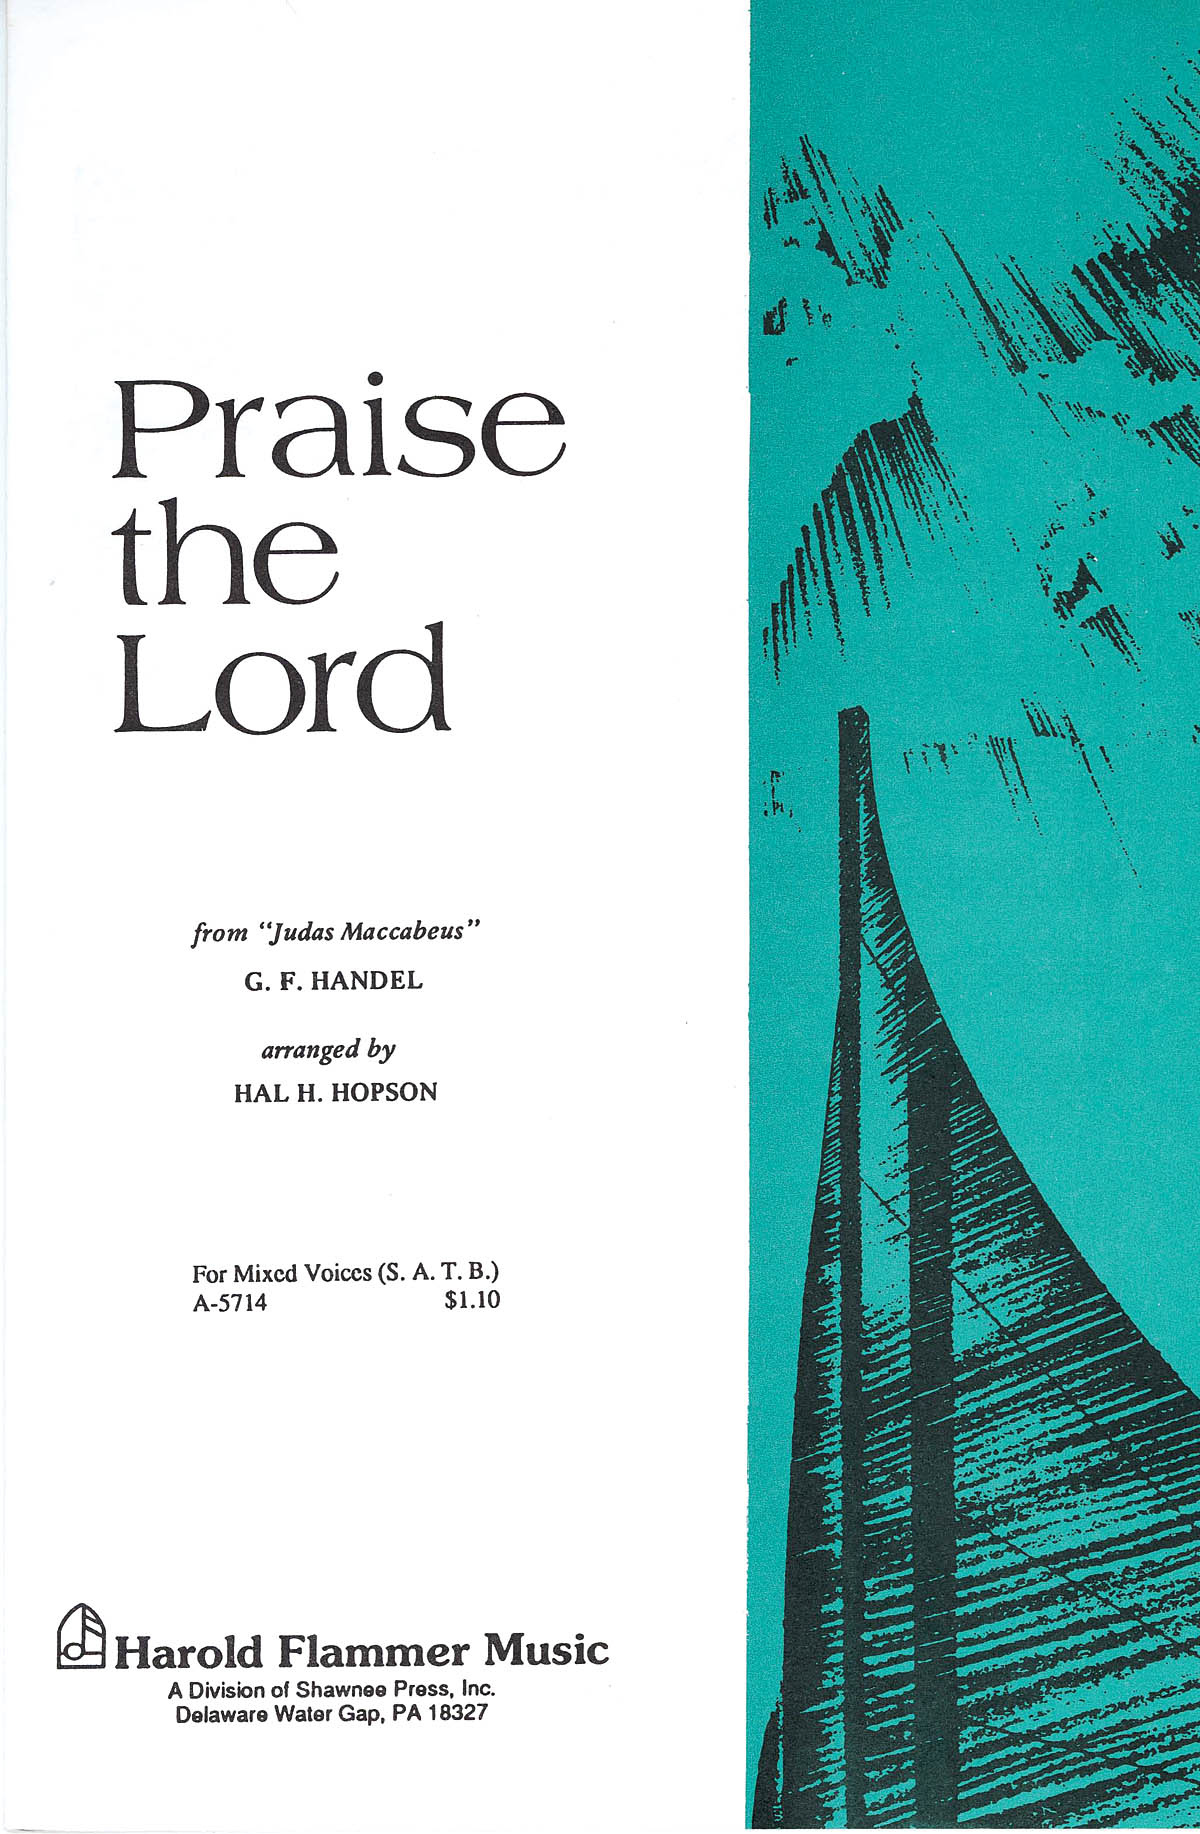 Georg Friedrich Hndel: Praise the Lord (from Judas Maccabeus): SATB: Vocal